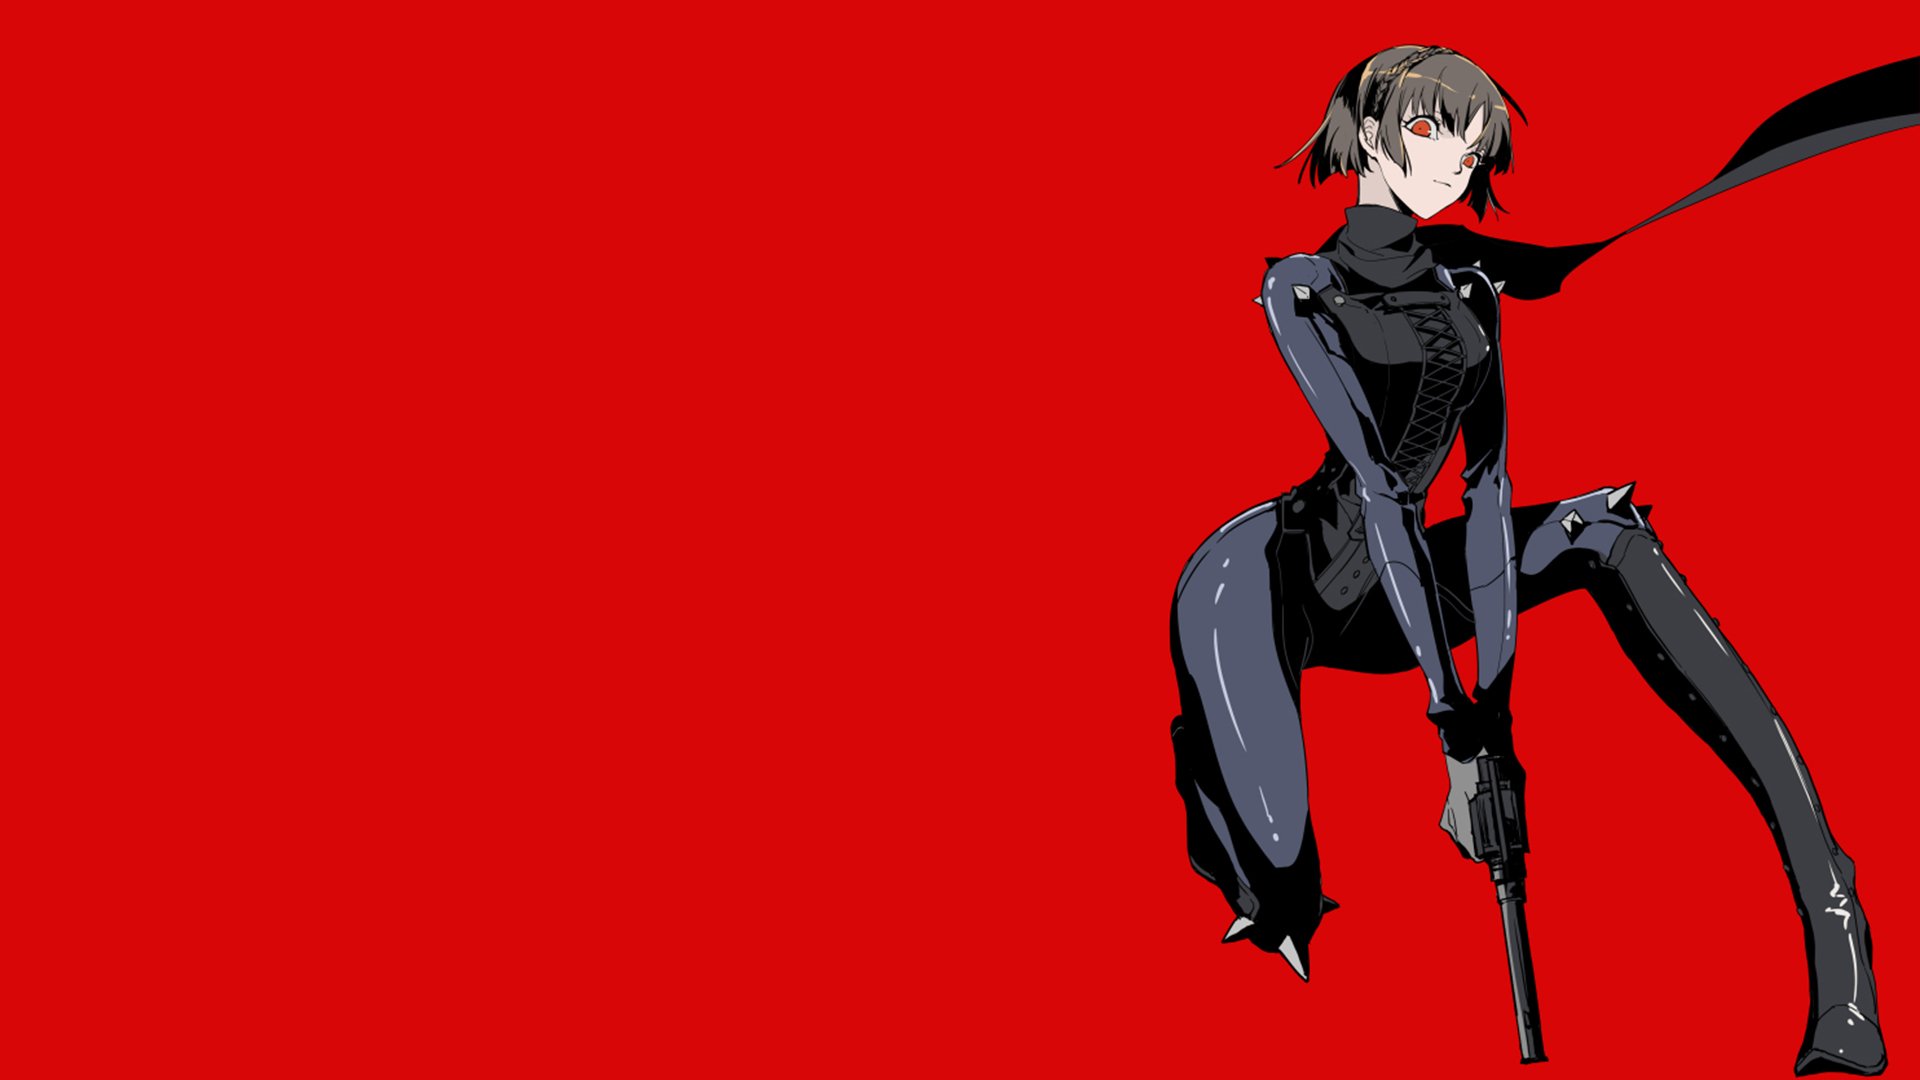 Persona 5 - HD Wallpaper | Background Image | 1920x1080 | ID:922414